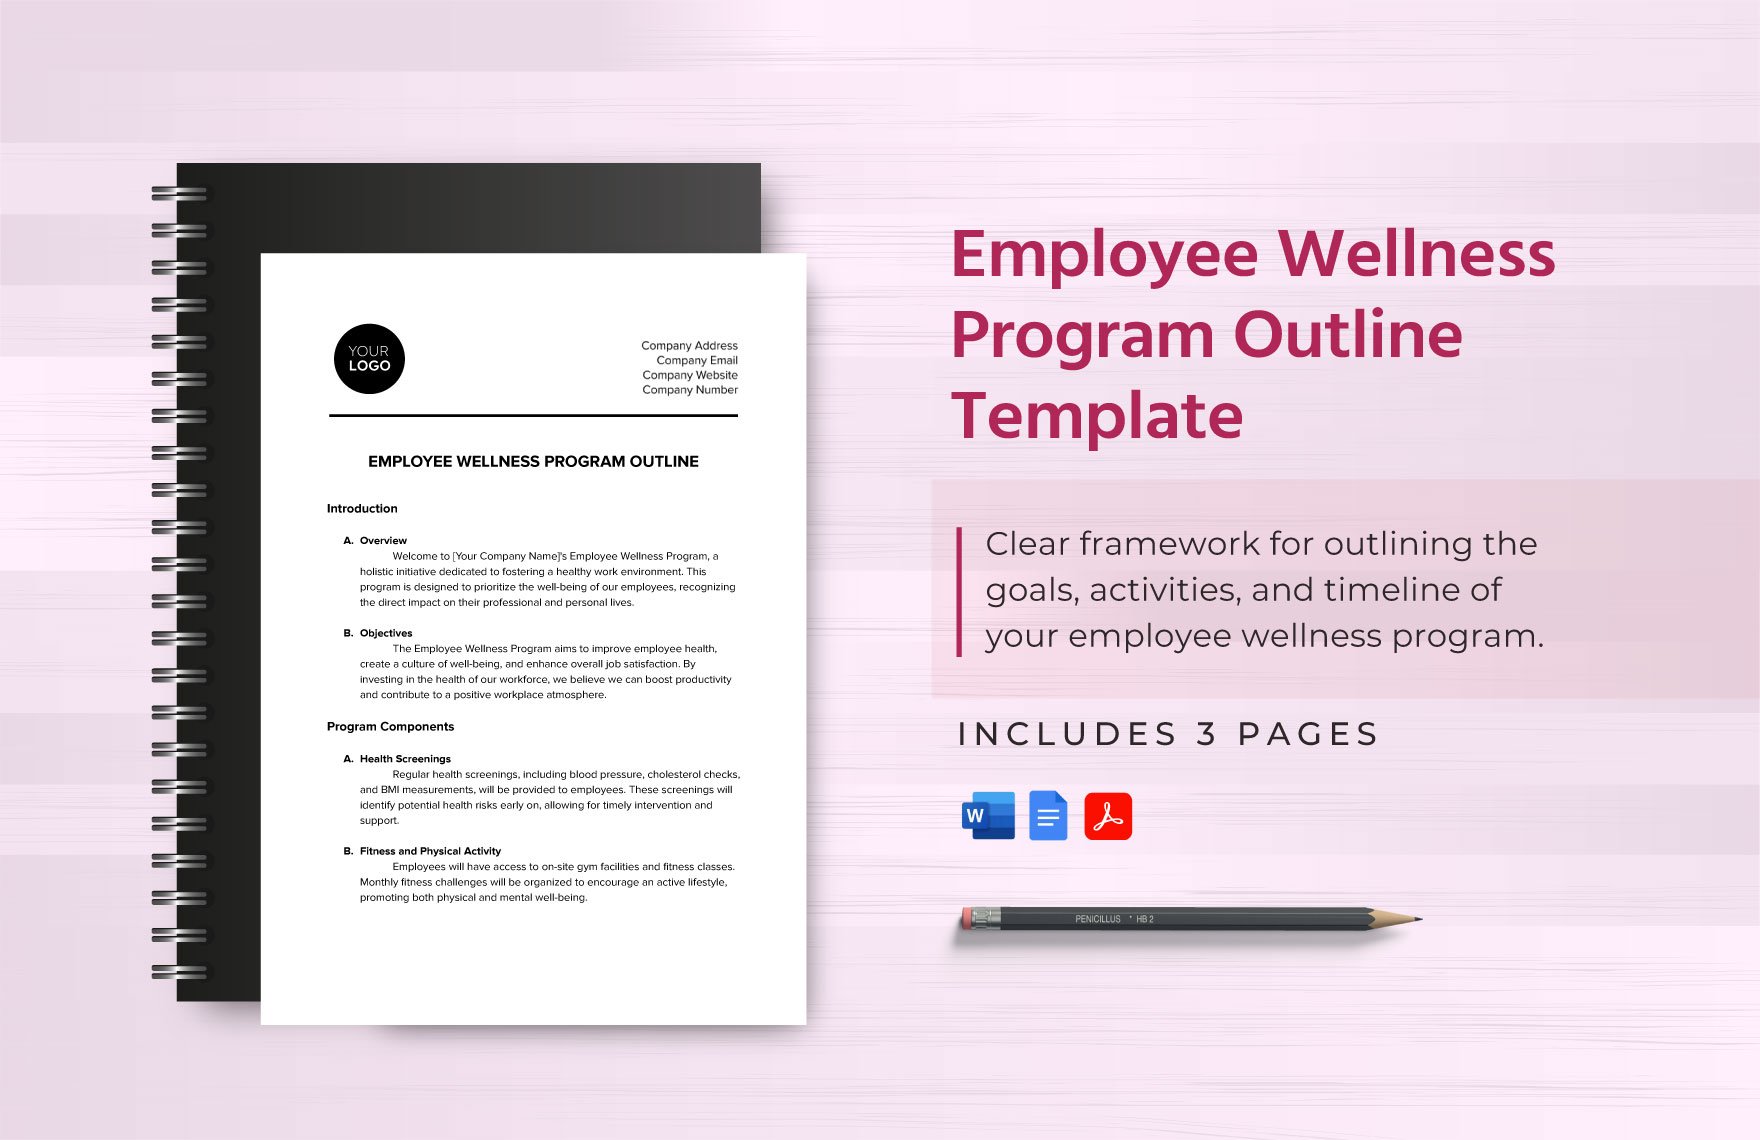 Employee Wellness Program Outline Template